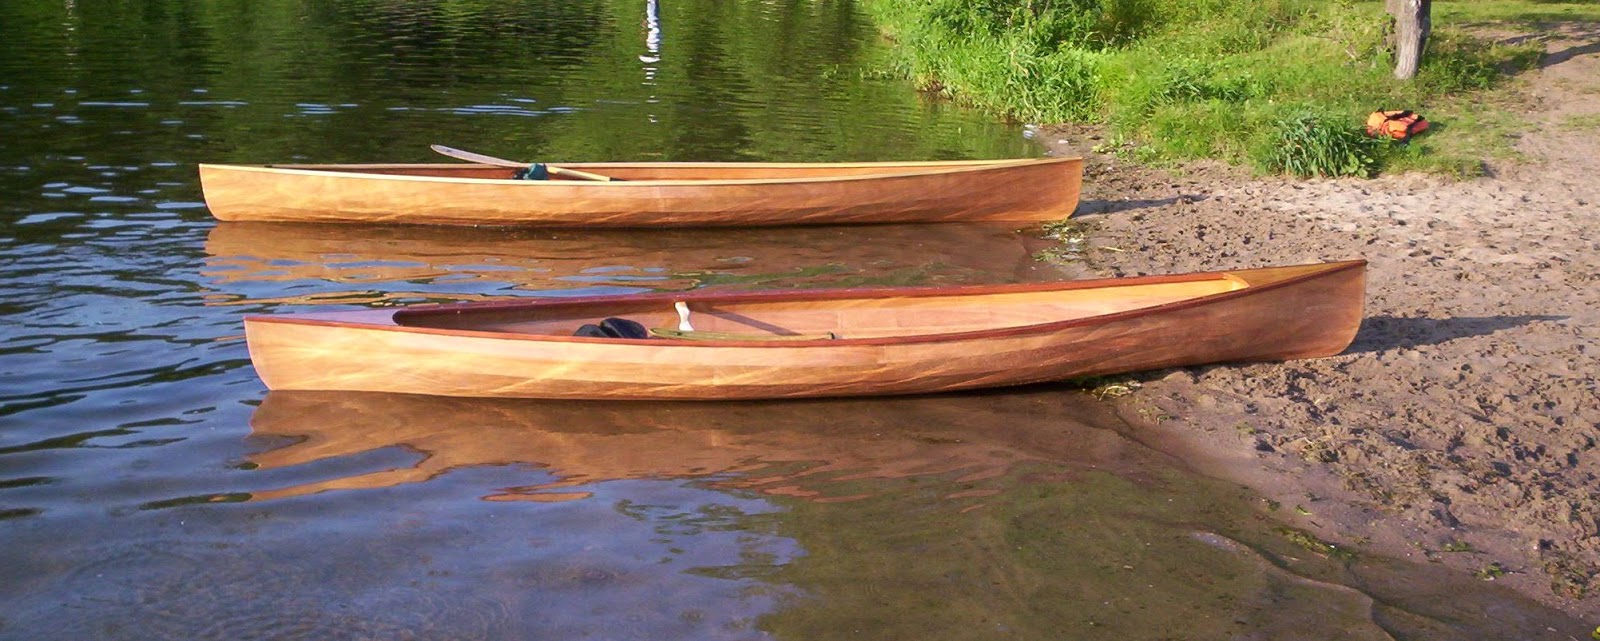 sean hartman’s lashed skin on frame canoe – intheboatshed.net